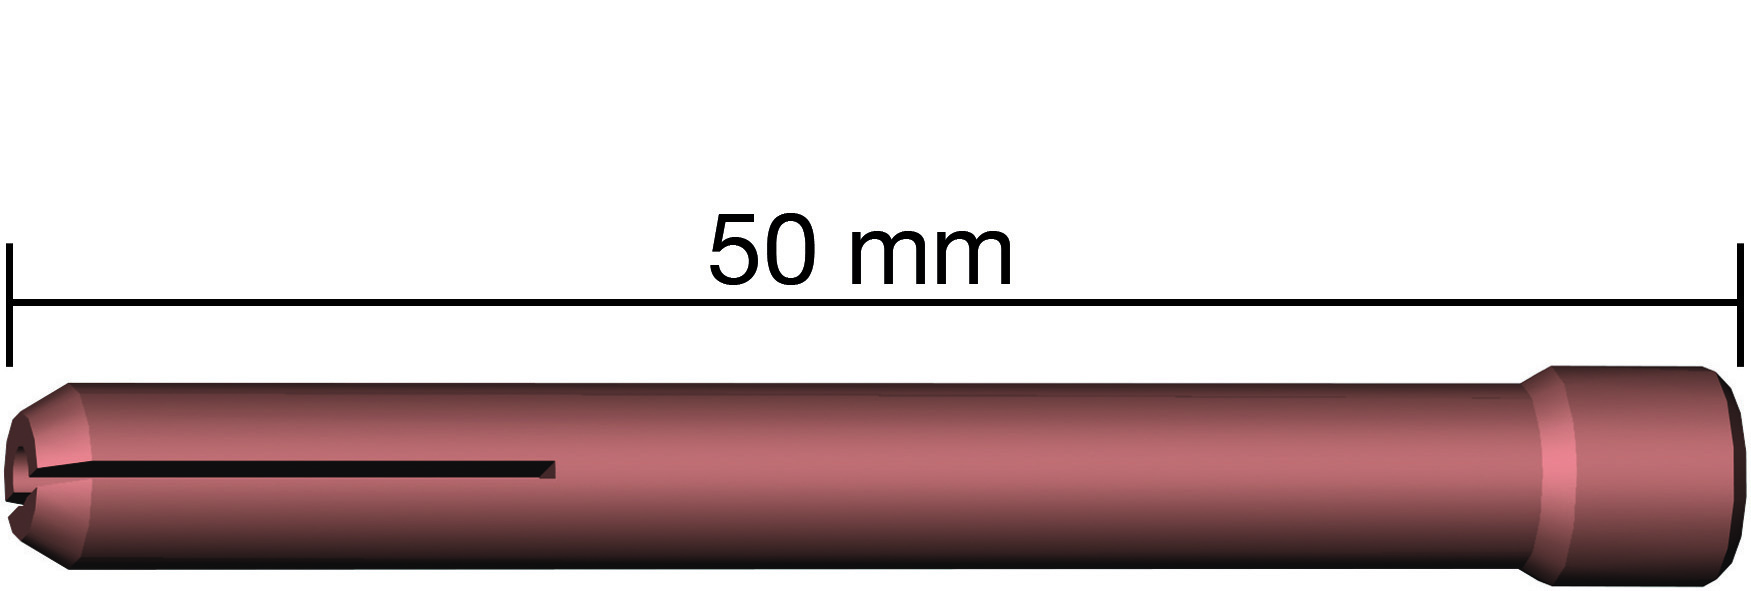 Spannhülsen 1,6 mm 50 mm Lg. 702.0008